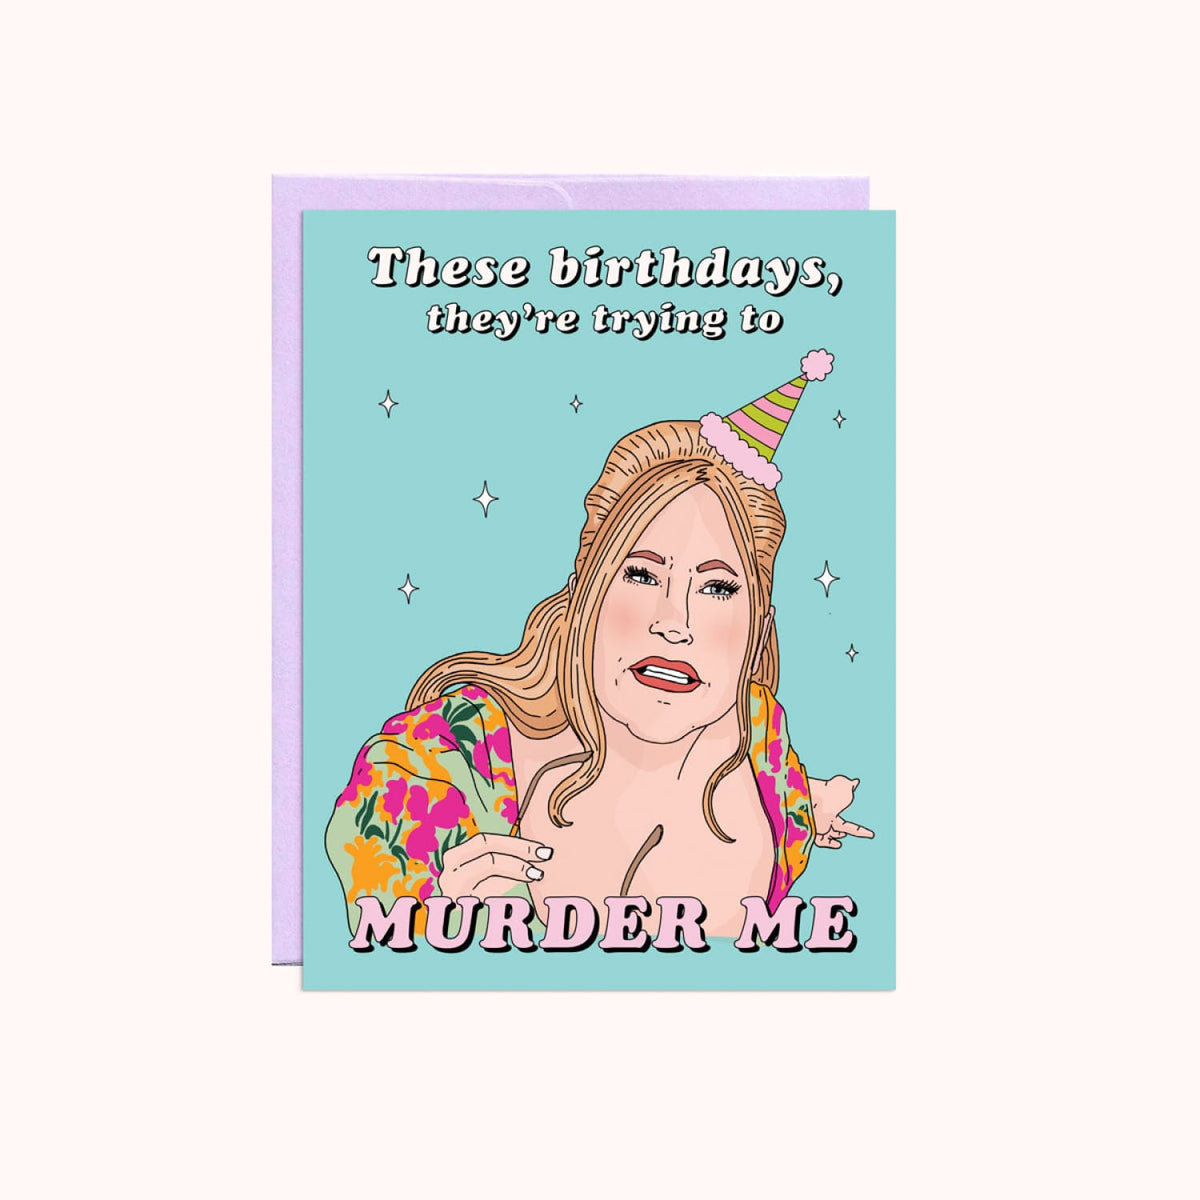 Tanya Murder Me Birthday Card 0223 - Groupbycolor -